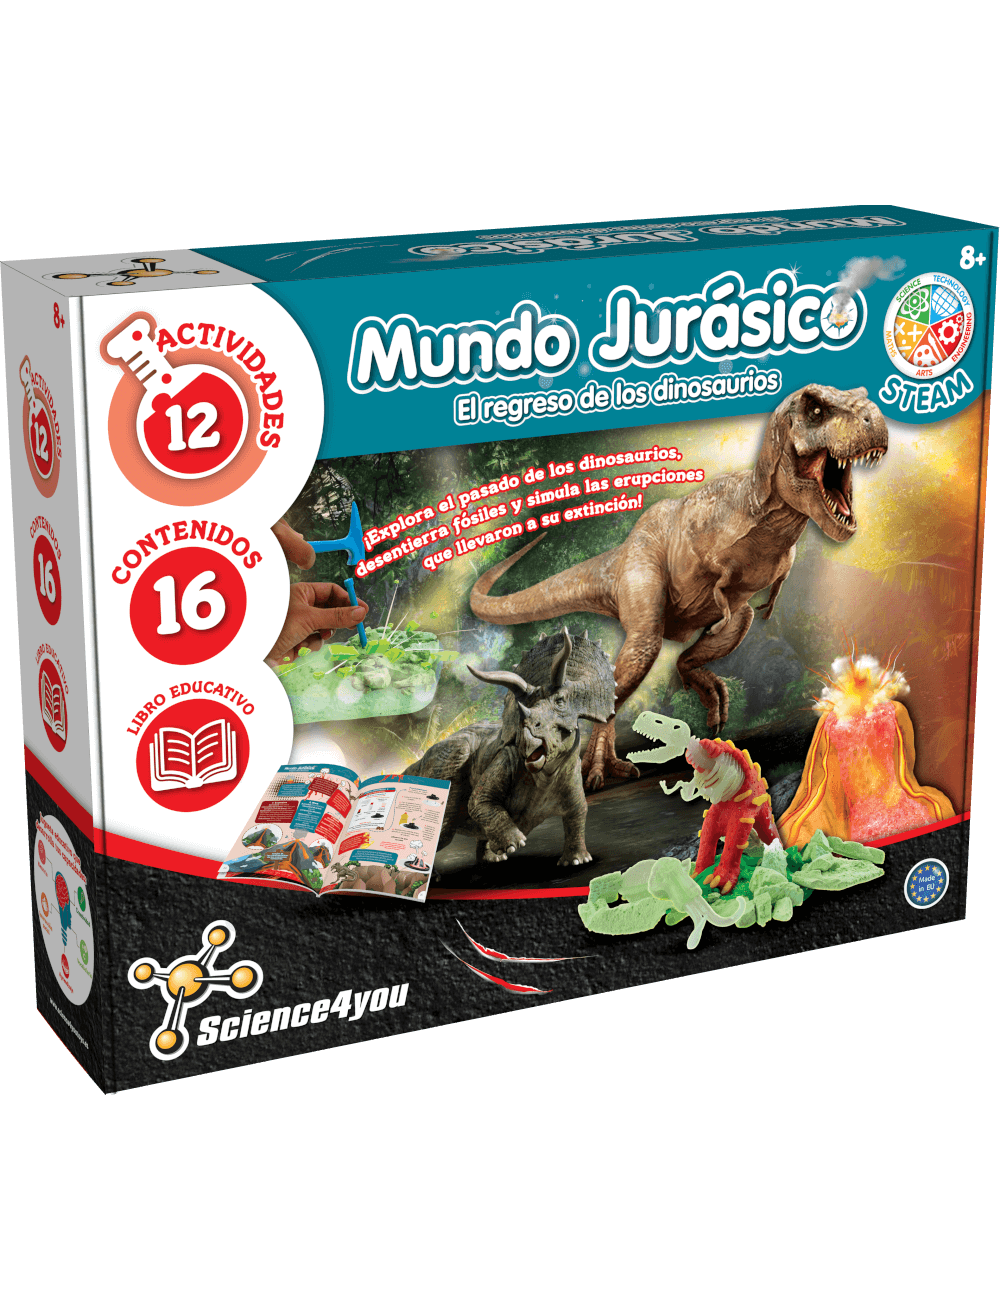 Juguetes de dinosaurios para niños de 3 a 5 juguetes de